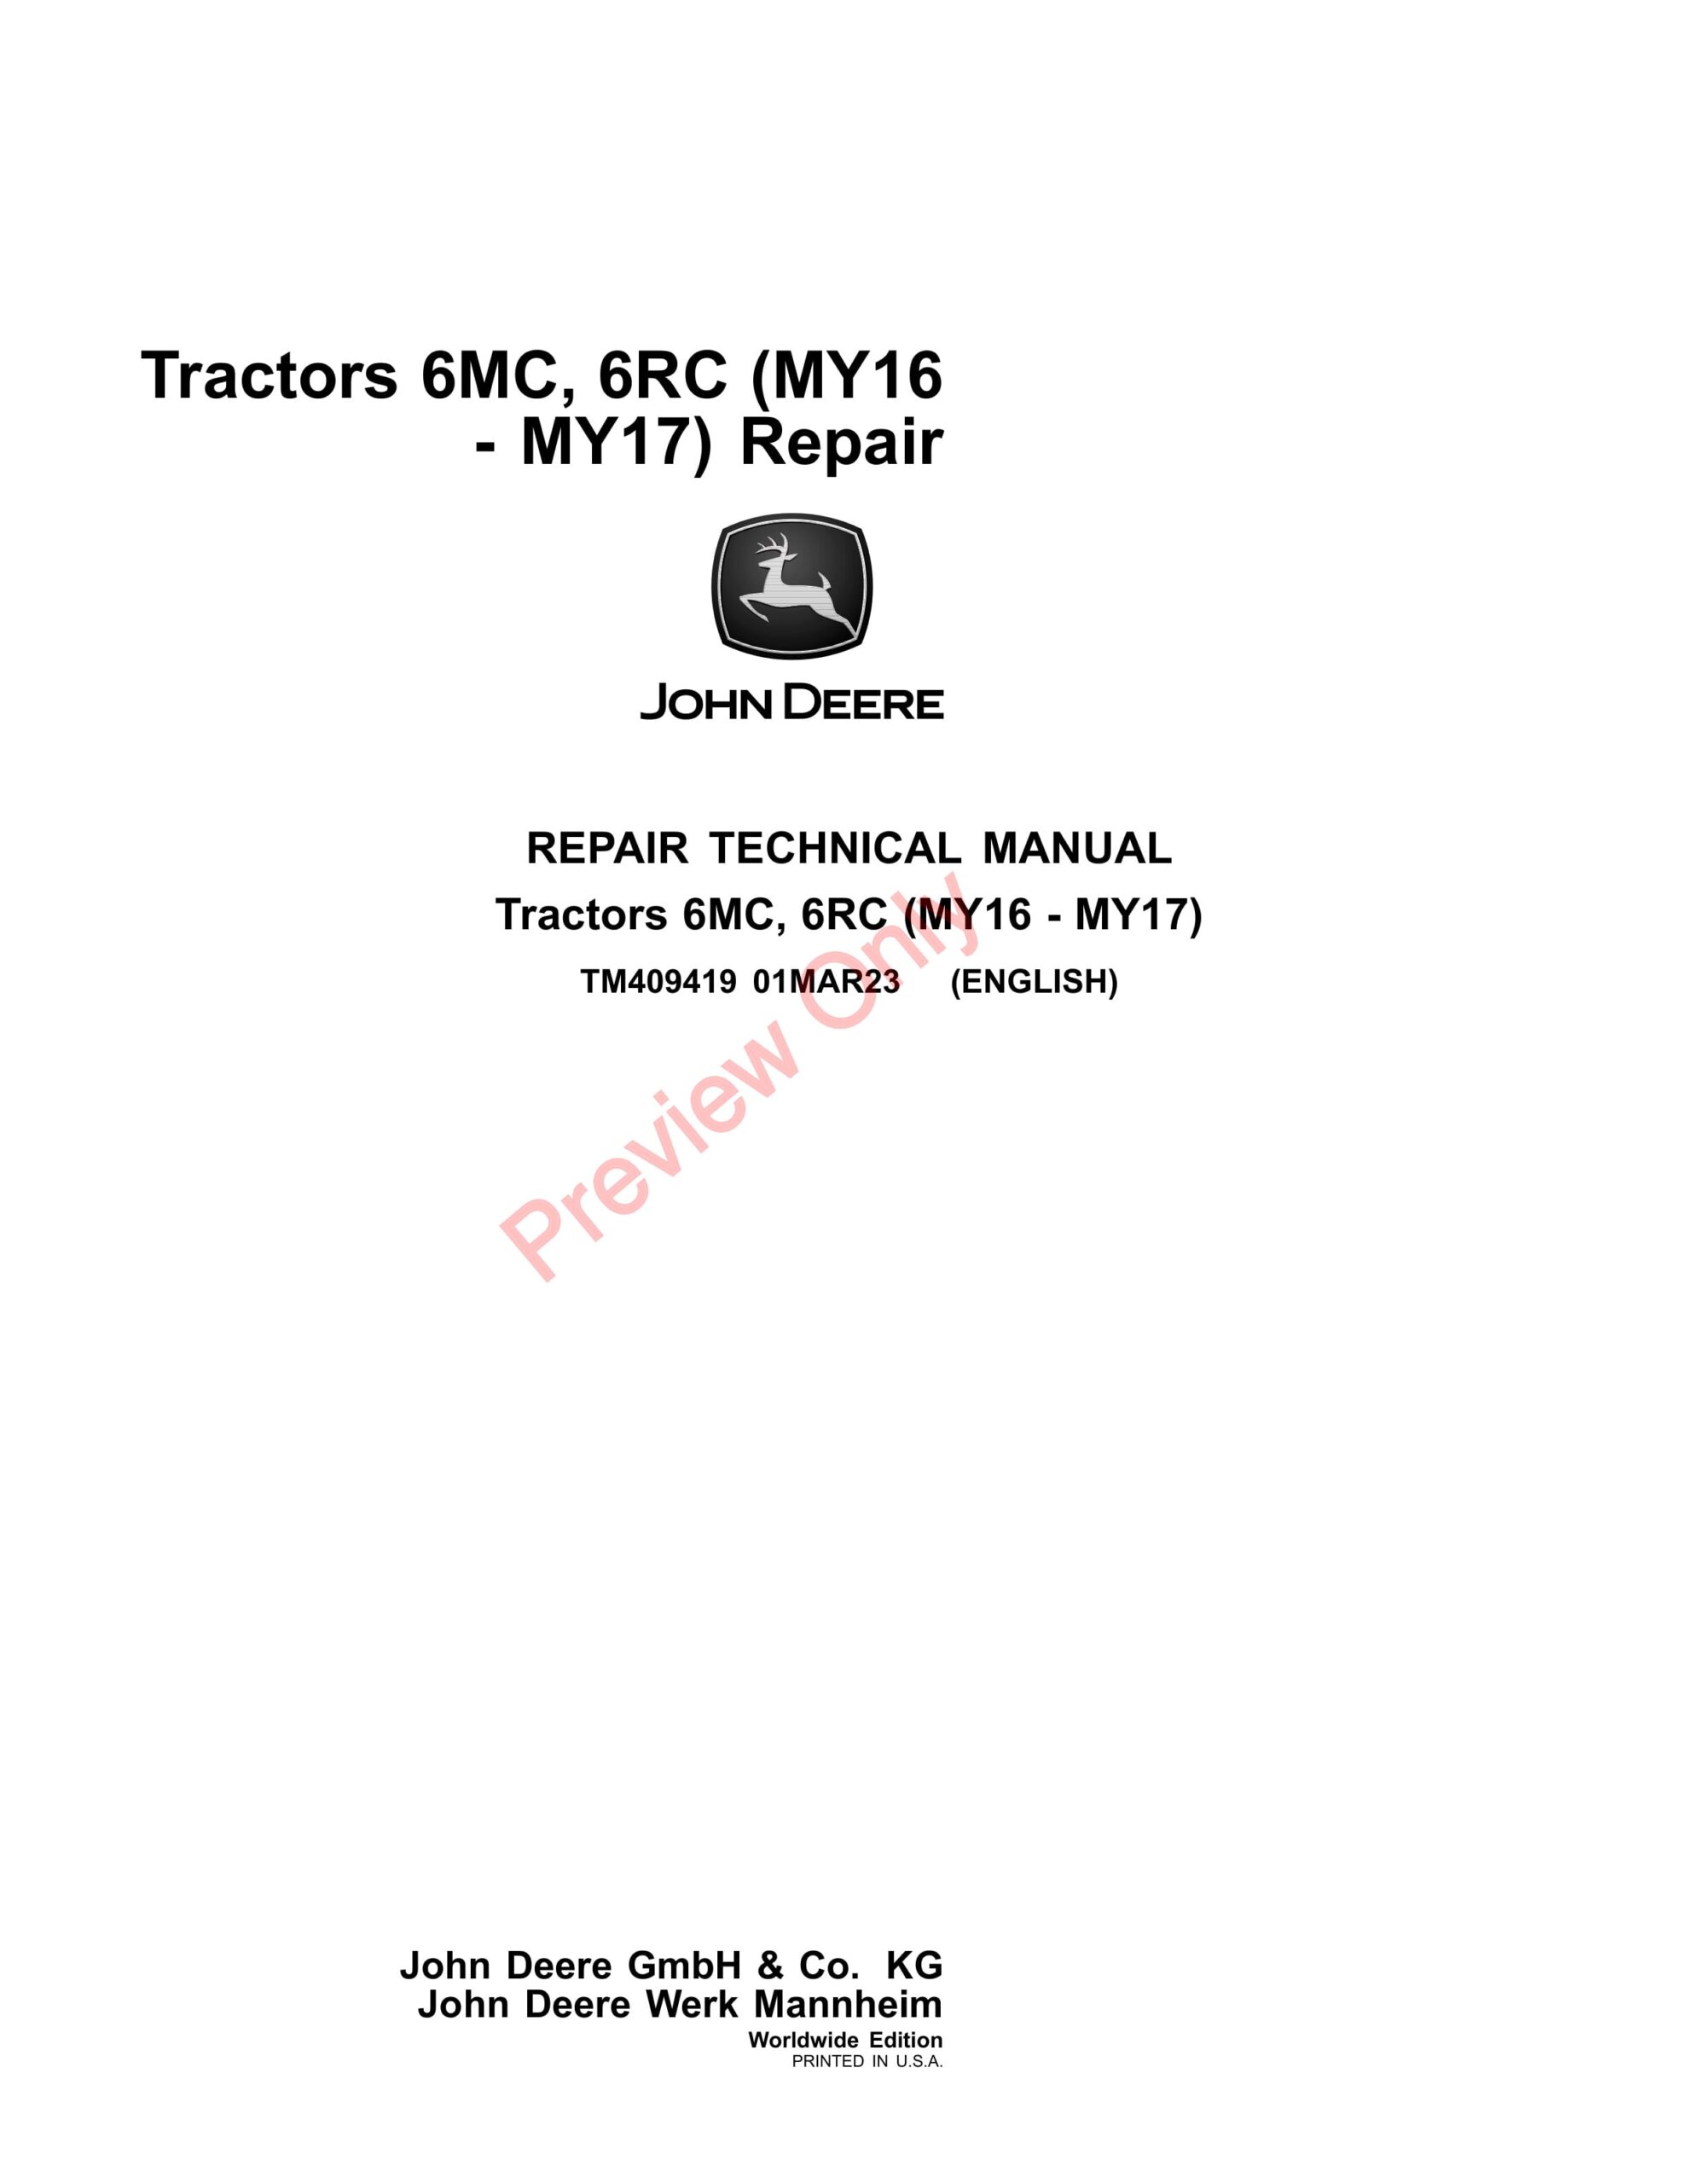 John Deere 6095MC, 6105MC, 6115MC, 6095RC, 6105RC and 6115RC Tractors Repair Technical Manual TM409419 01MAR23-1